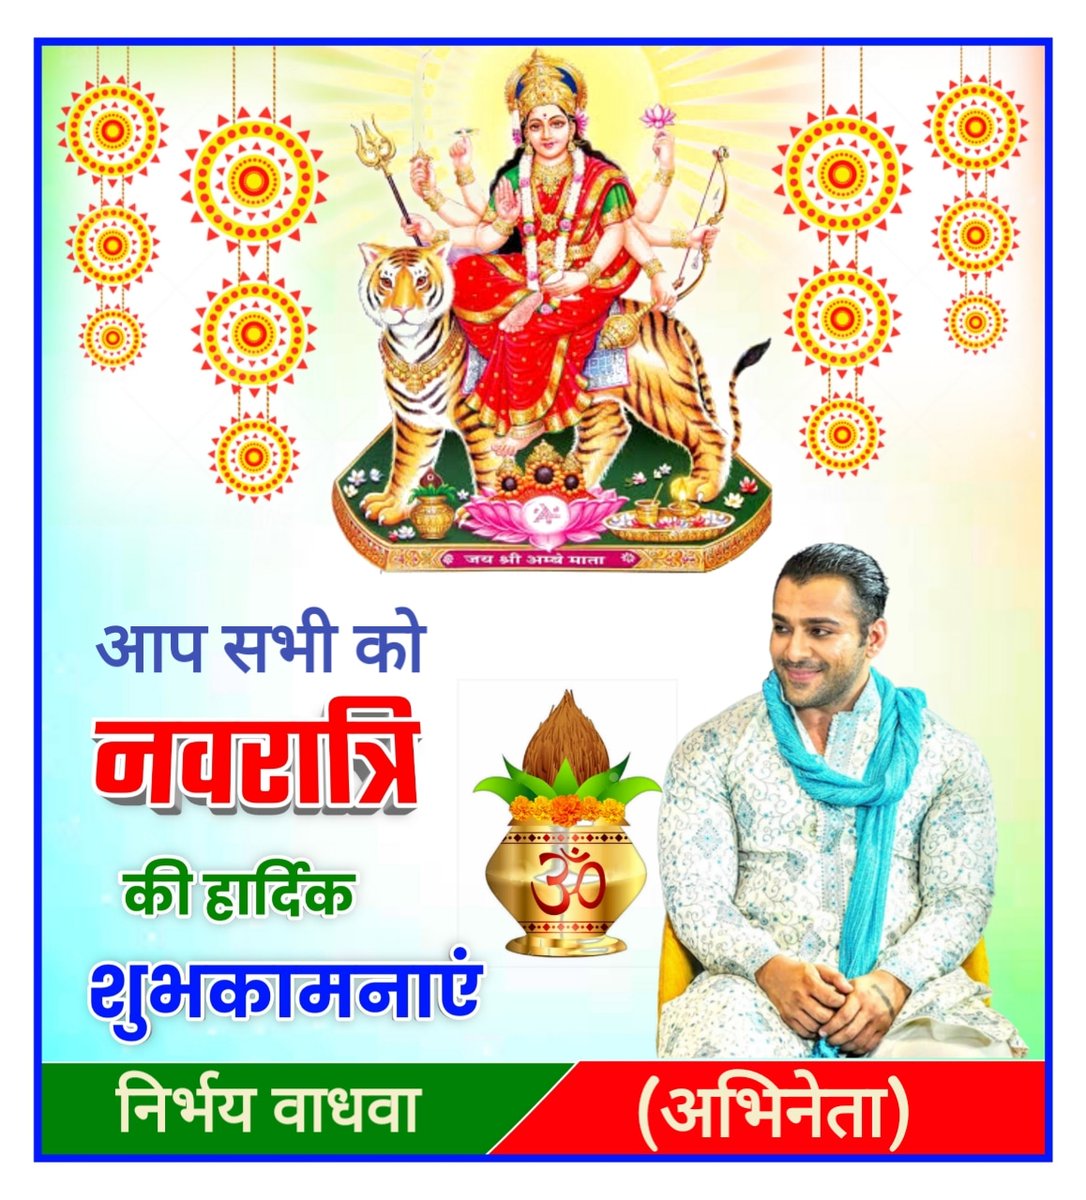 आप सभी देशवासियो को नवरात्रि की हार्दिक शुभकामनाएं।
#जयमातादी #जयमाँदुर्गा 
@NirbhayWadhwa